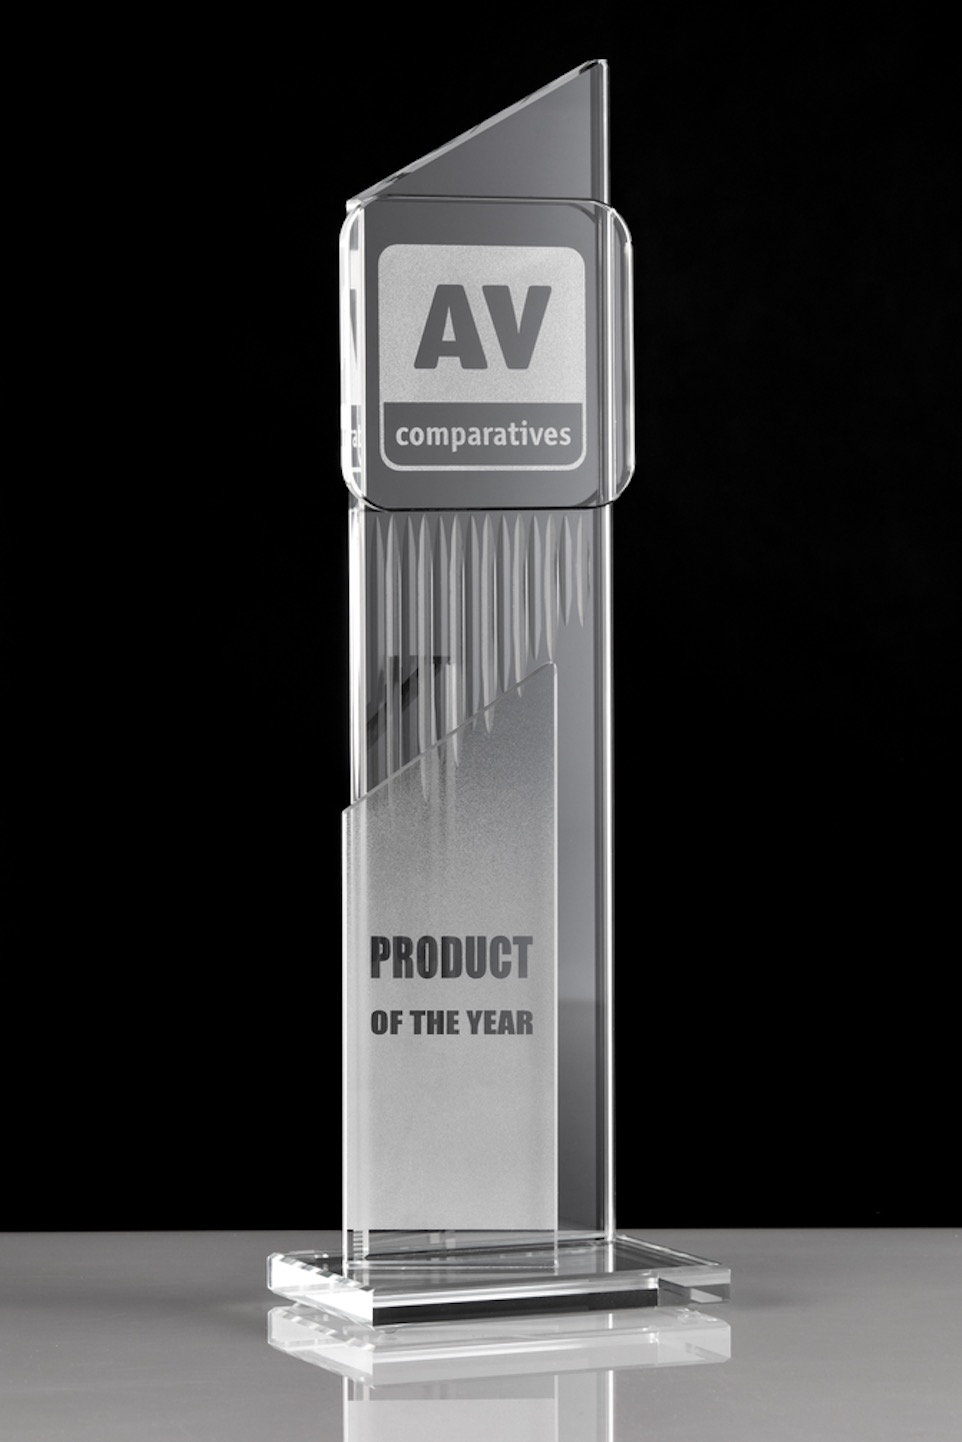 Kaspersky standard nhận giải thưởng cao nhất từ av-comparatives